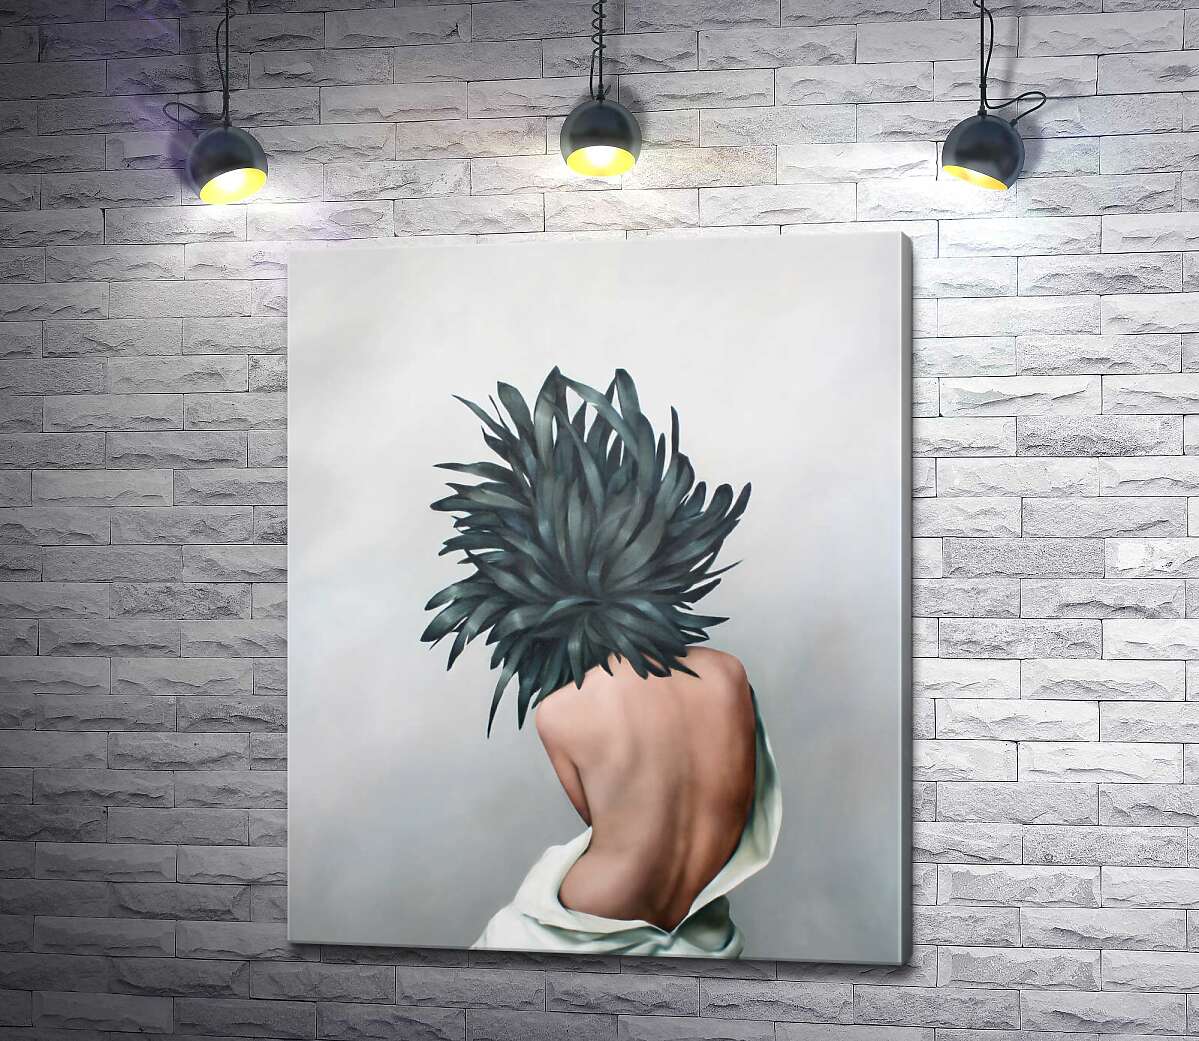 картина Цветок с перьями на голове у девушки - Эми Джадд (Amy Judd)